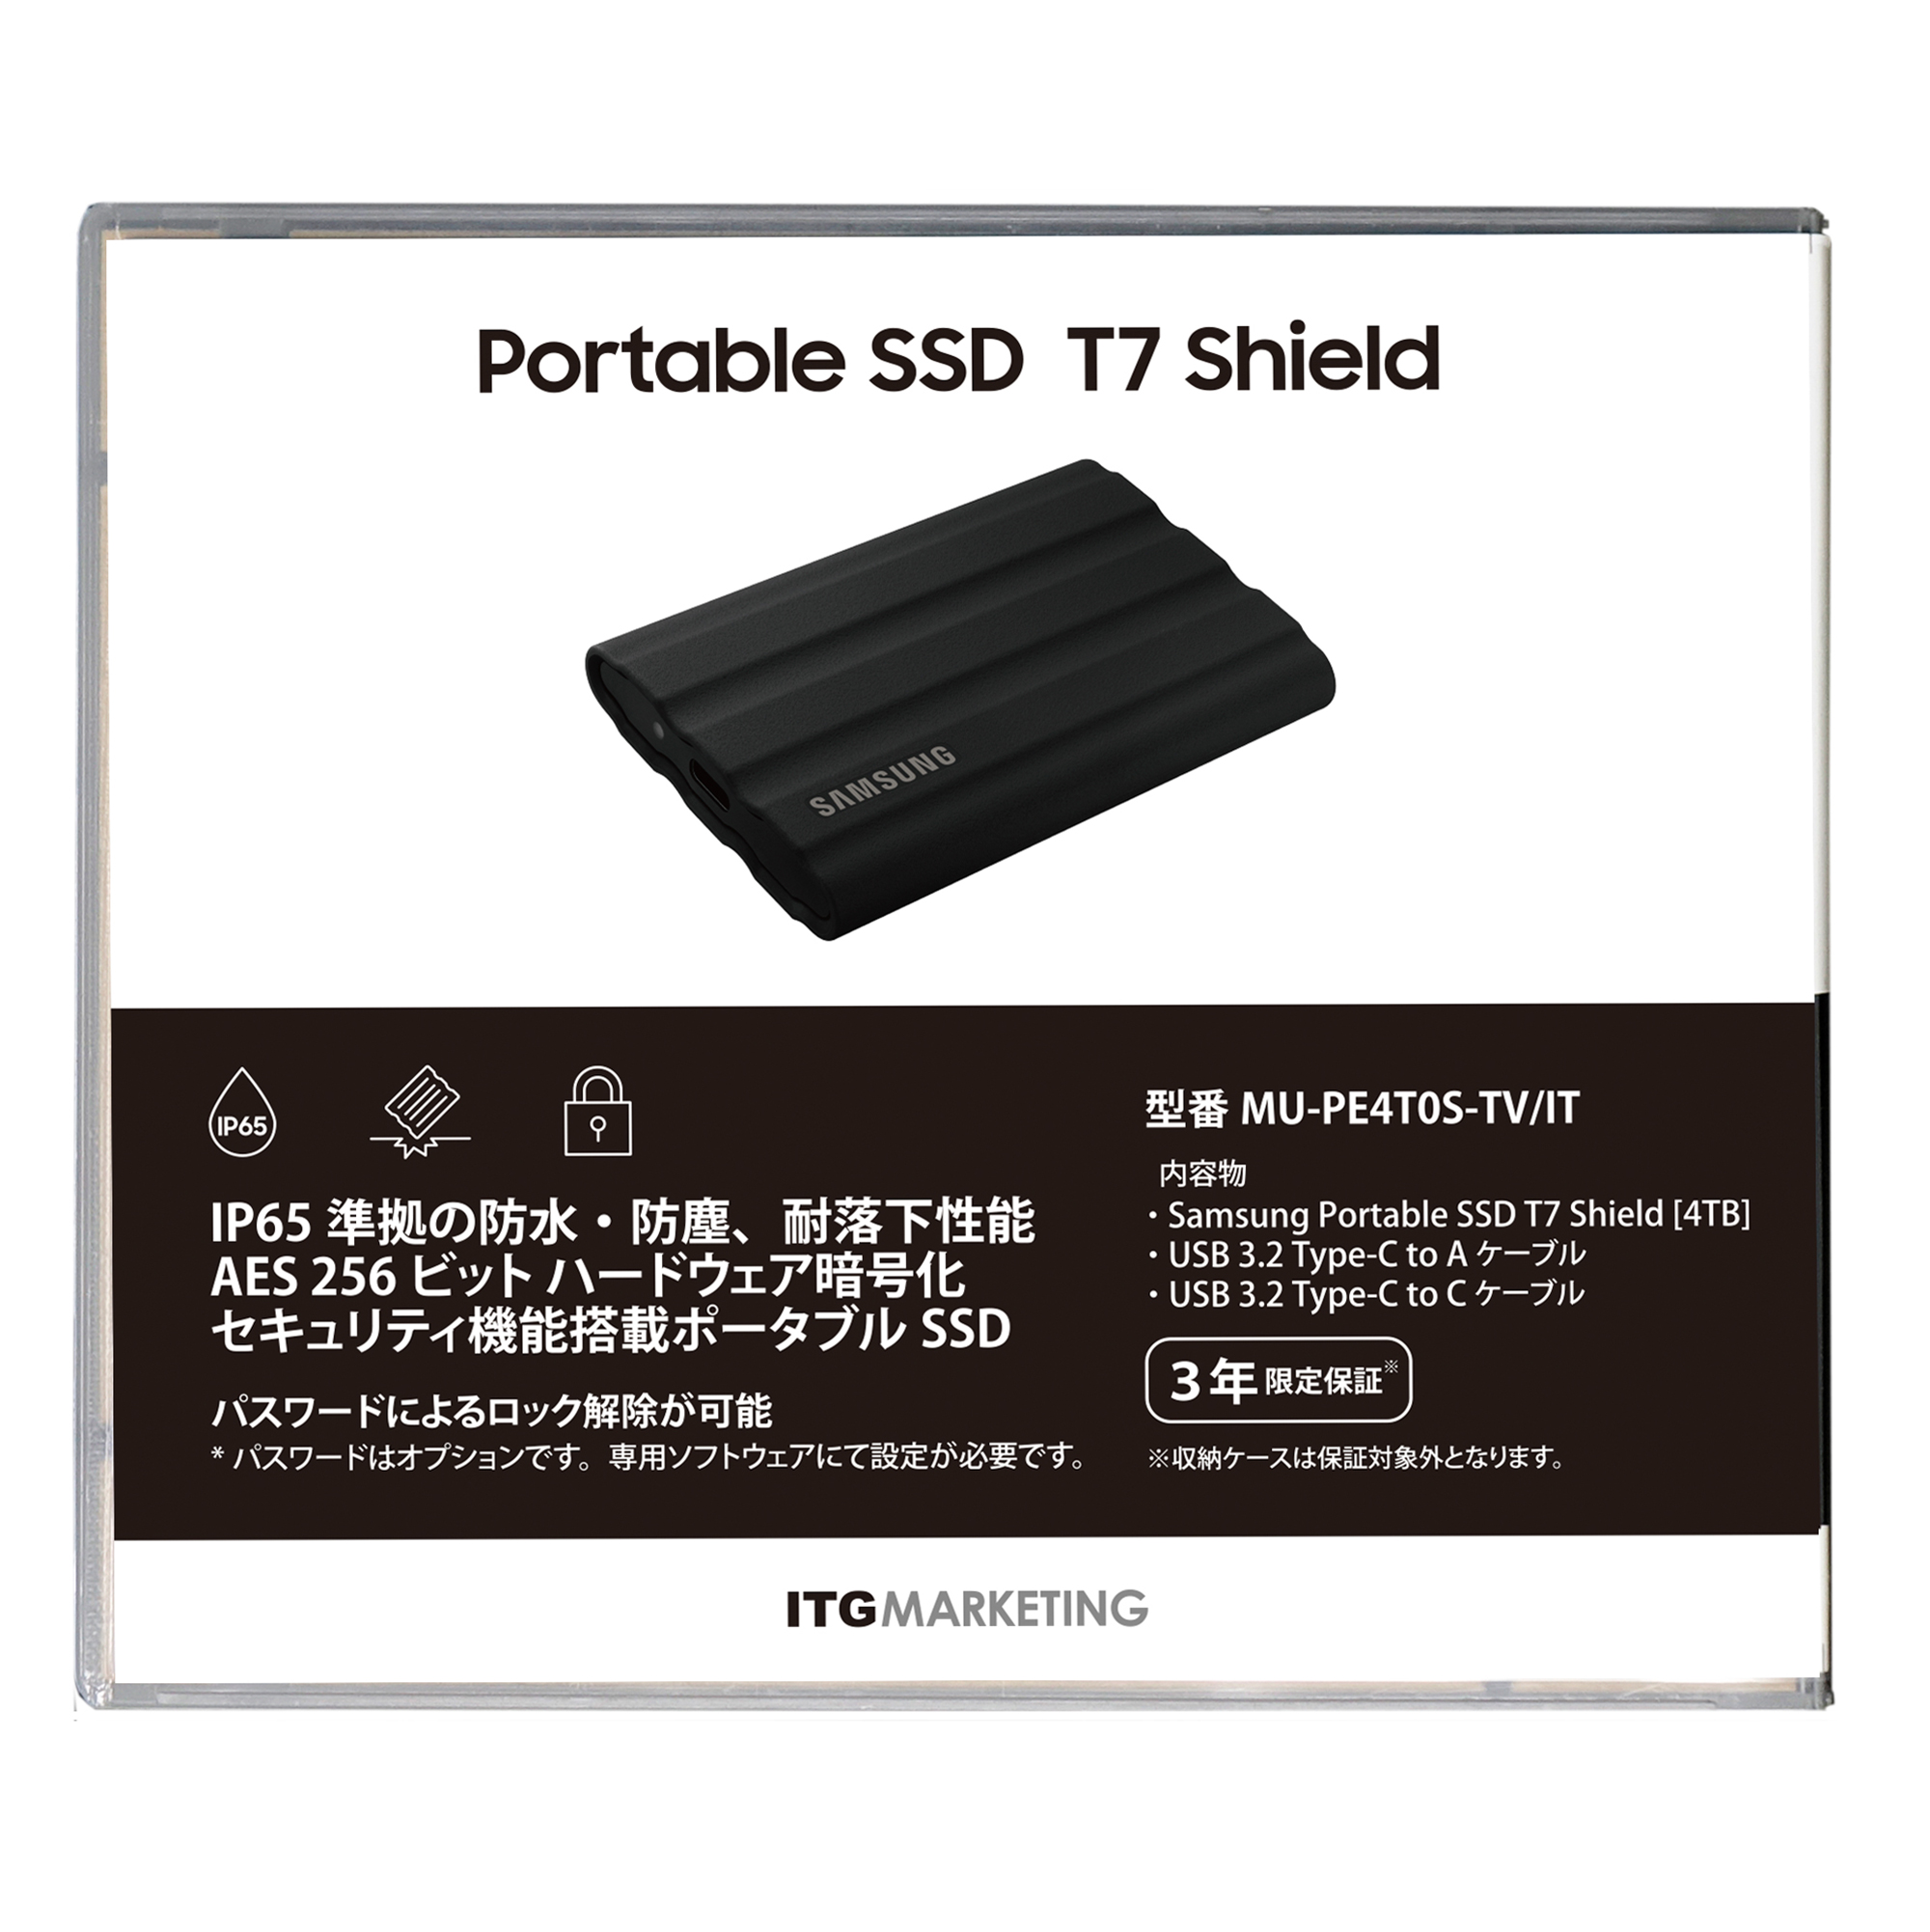 Portable SSD T7 Shield (4TB) 放送局向け専用ケース入りモデル | ITG